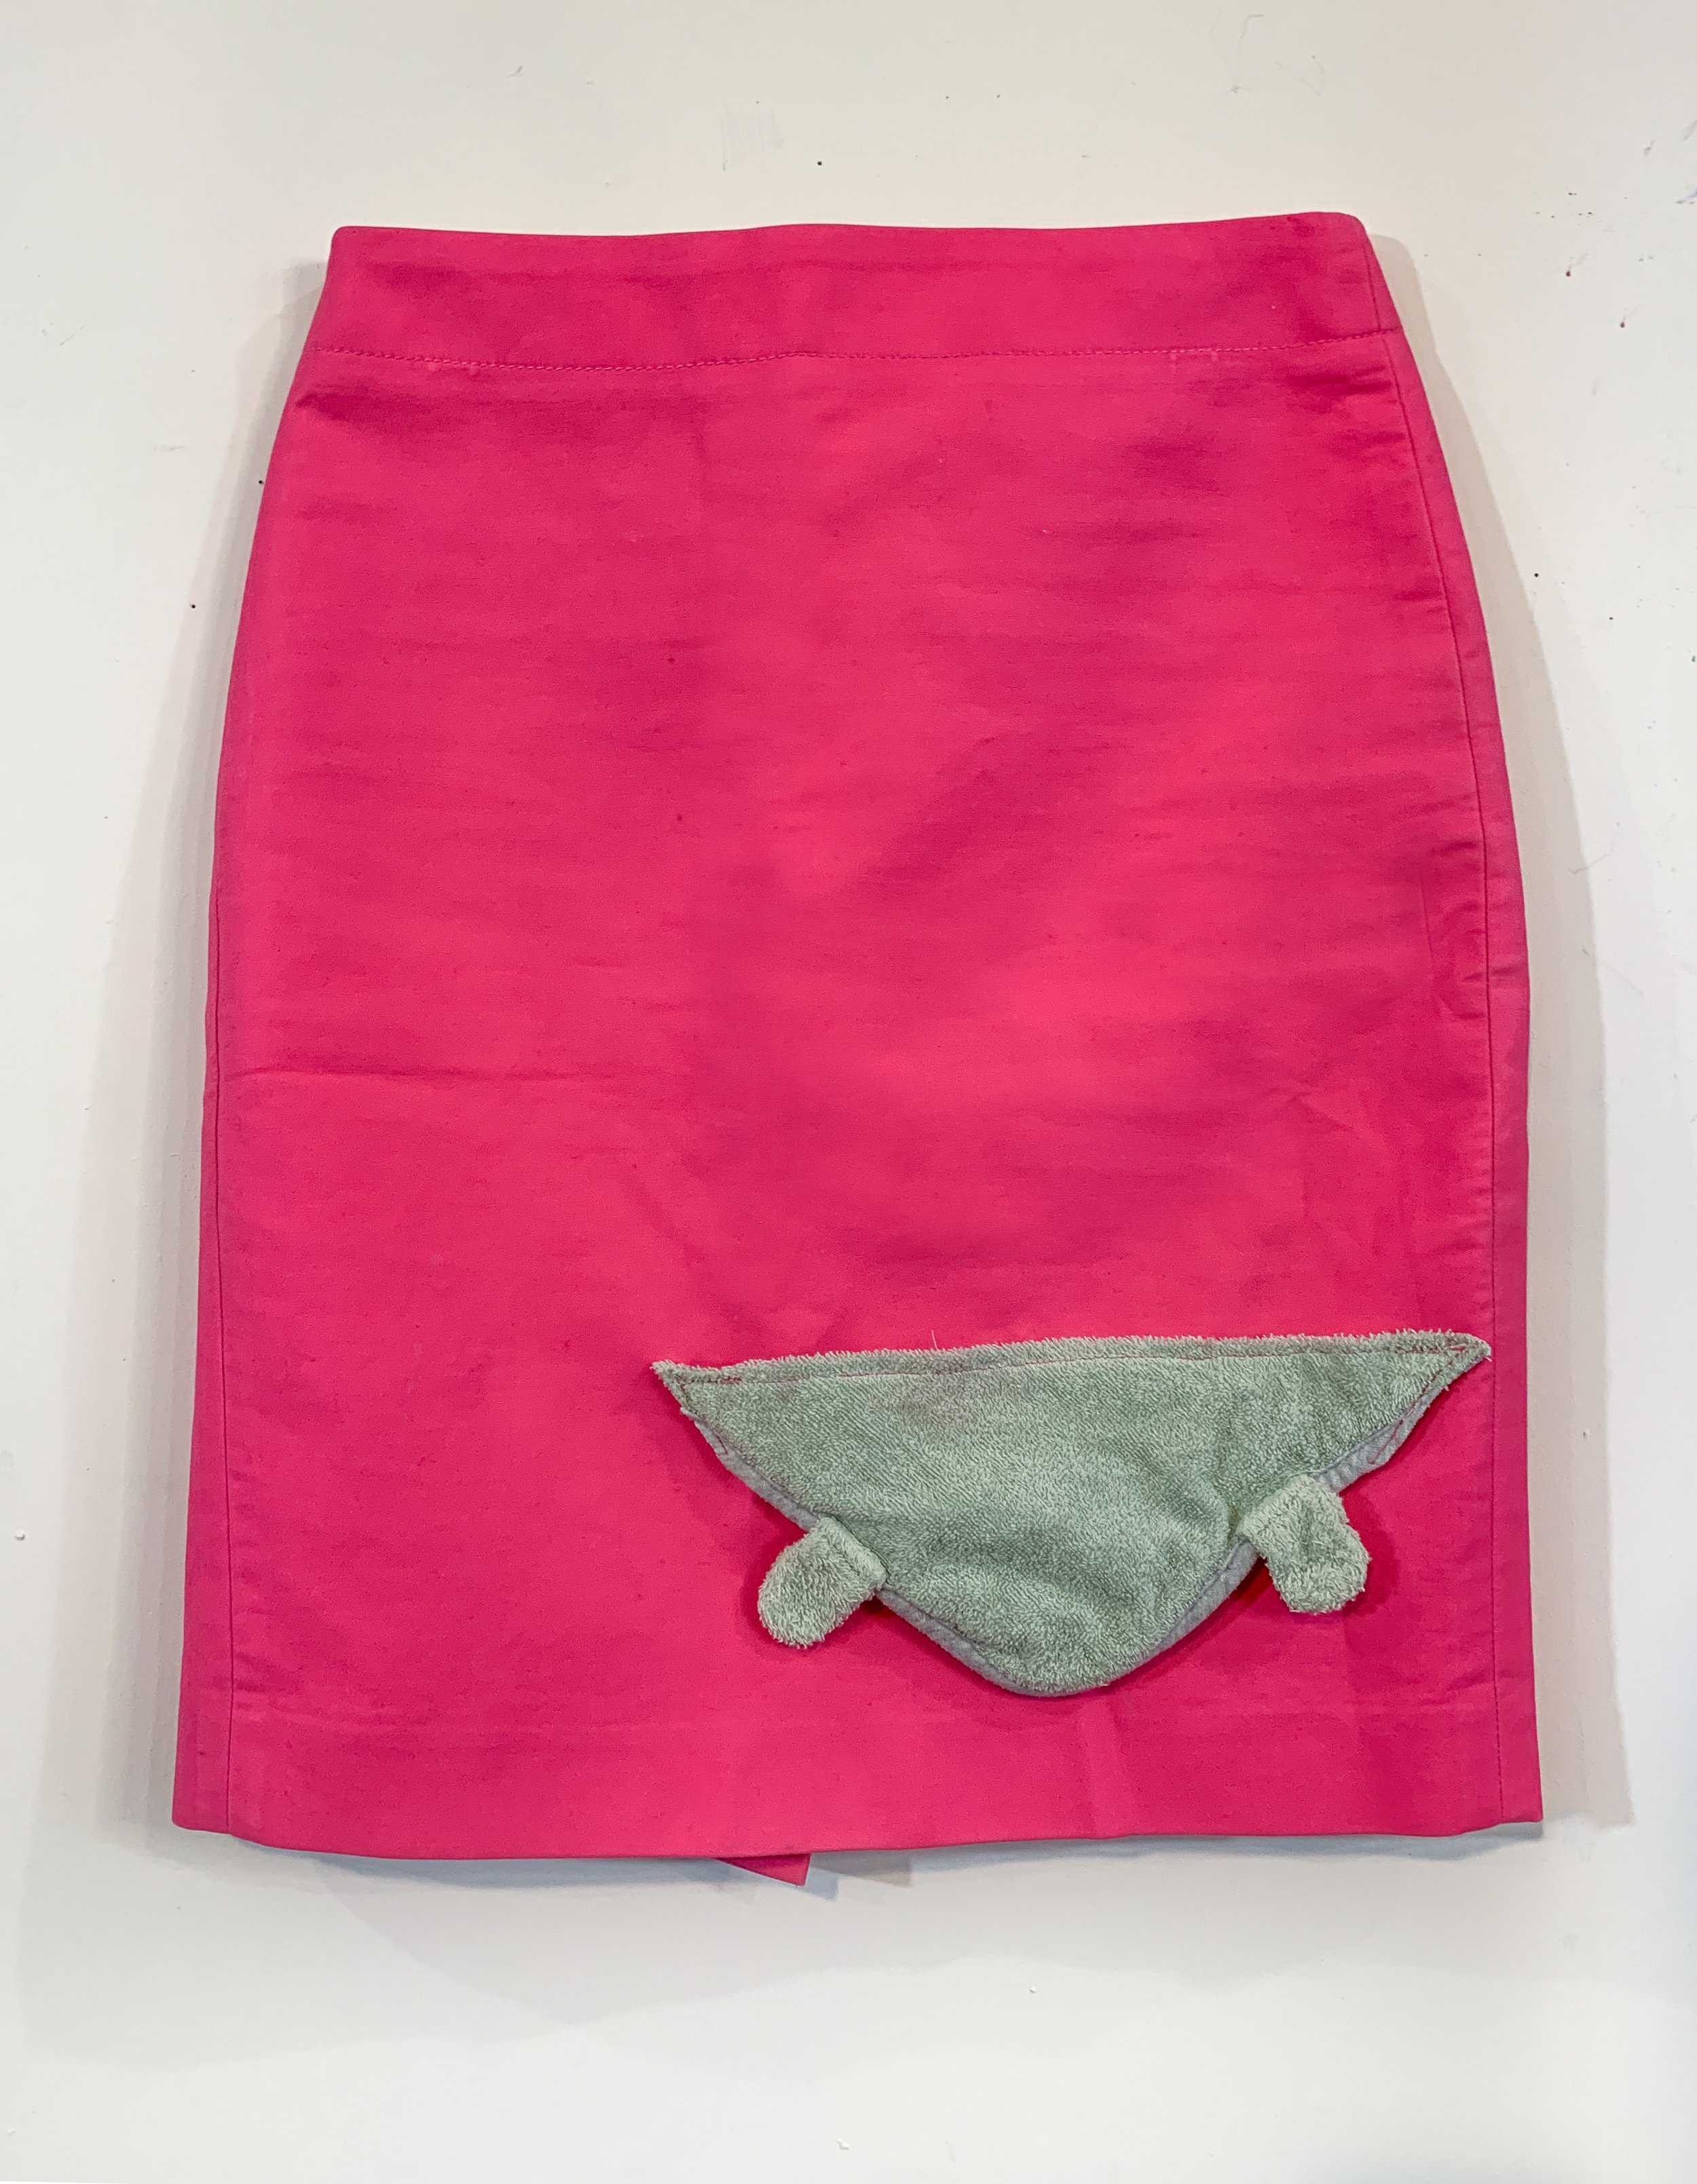 Pocket 8 (Pink Pencil Skirt)